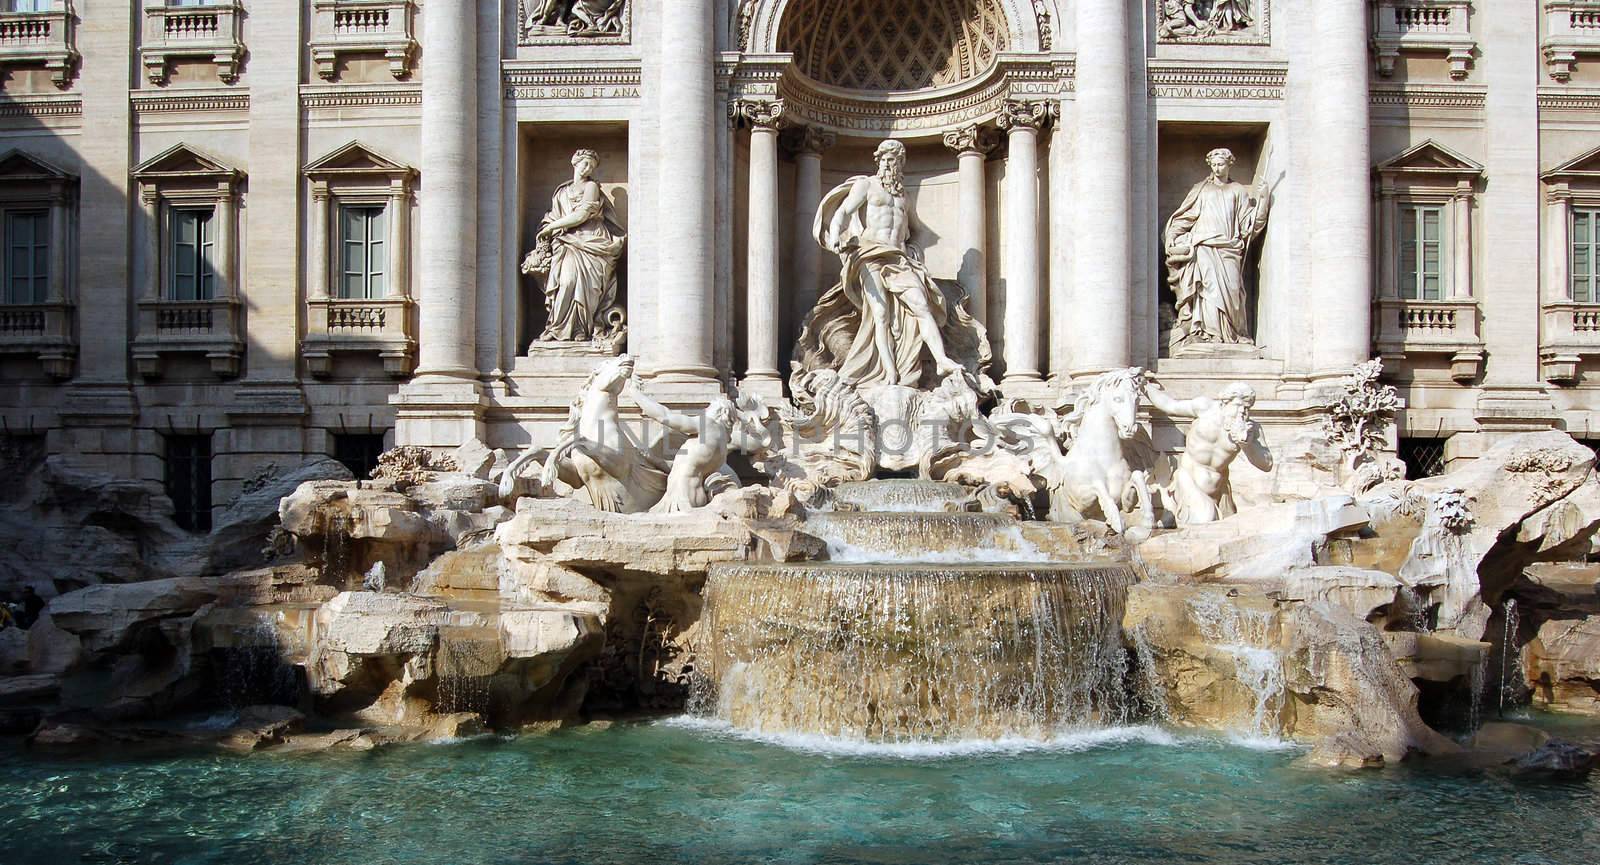 Trevi fountain - Fontana di Trevi. Rome beautiful places, Best of Italy.